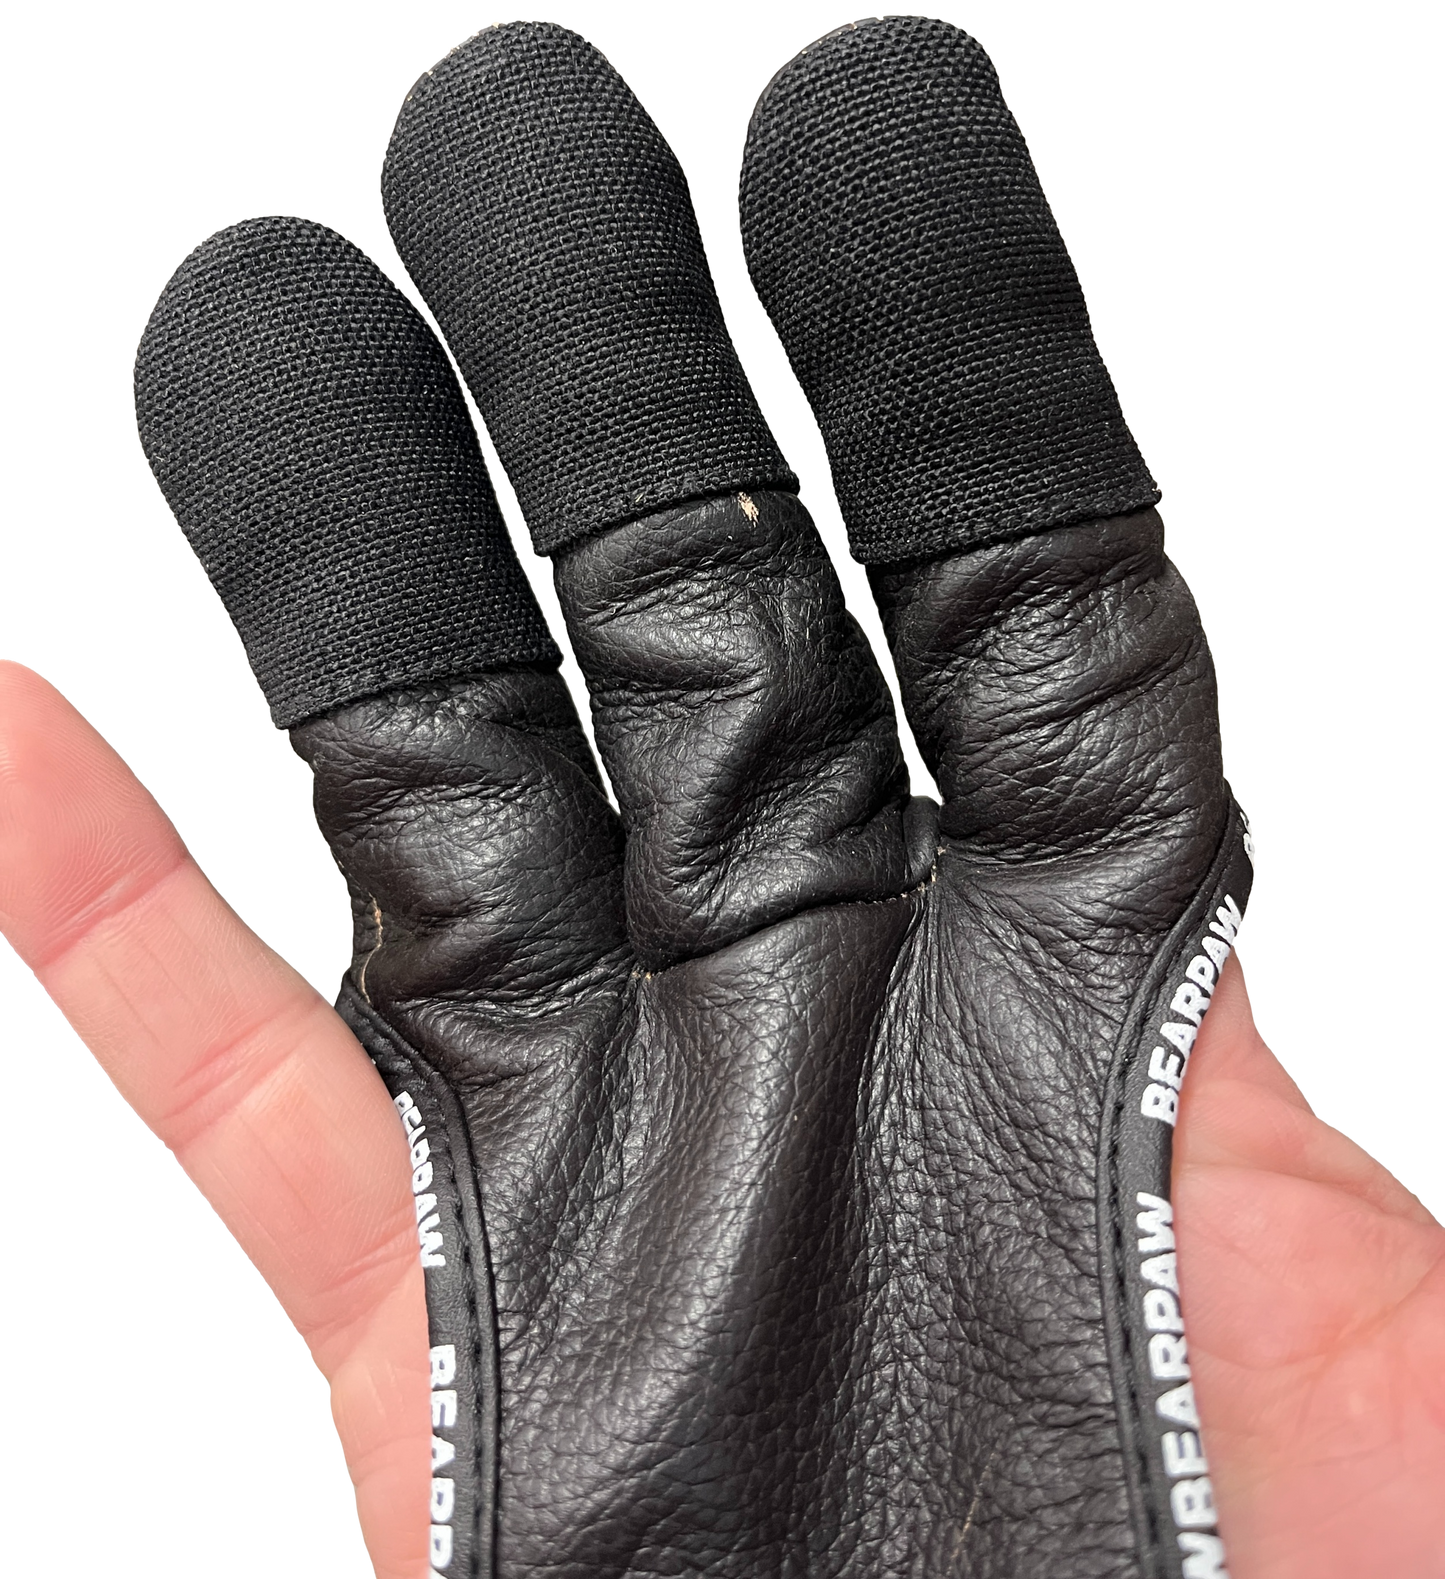 Bearpaw Bodnik Speed Glove